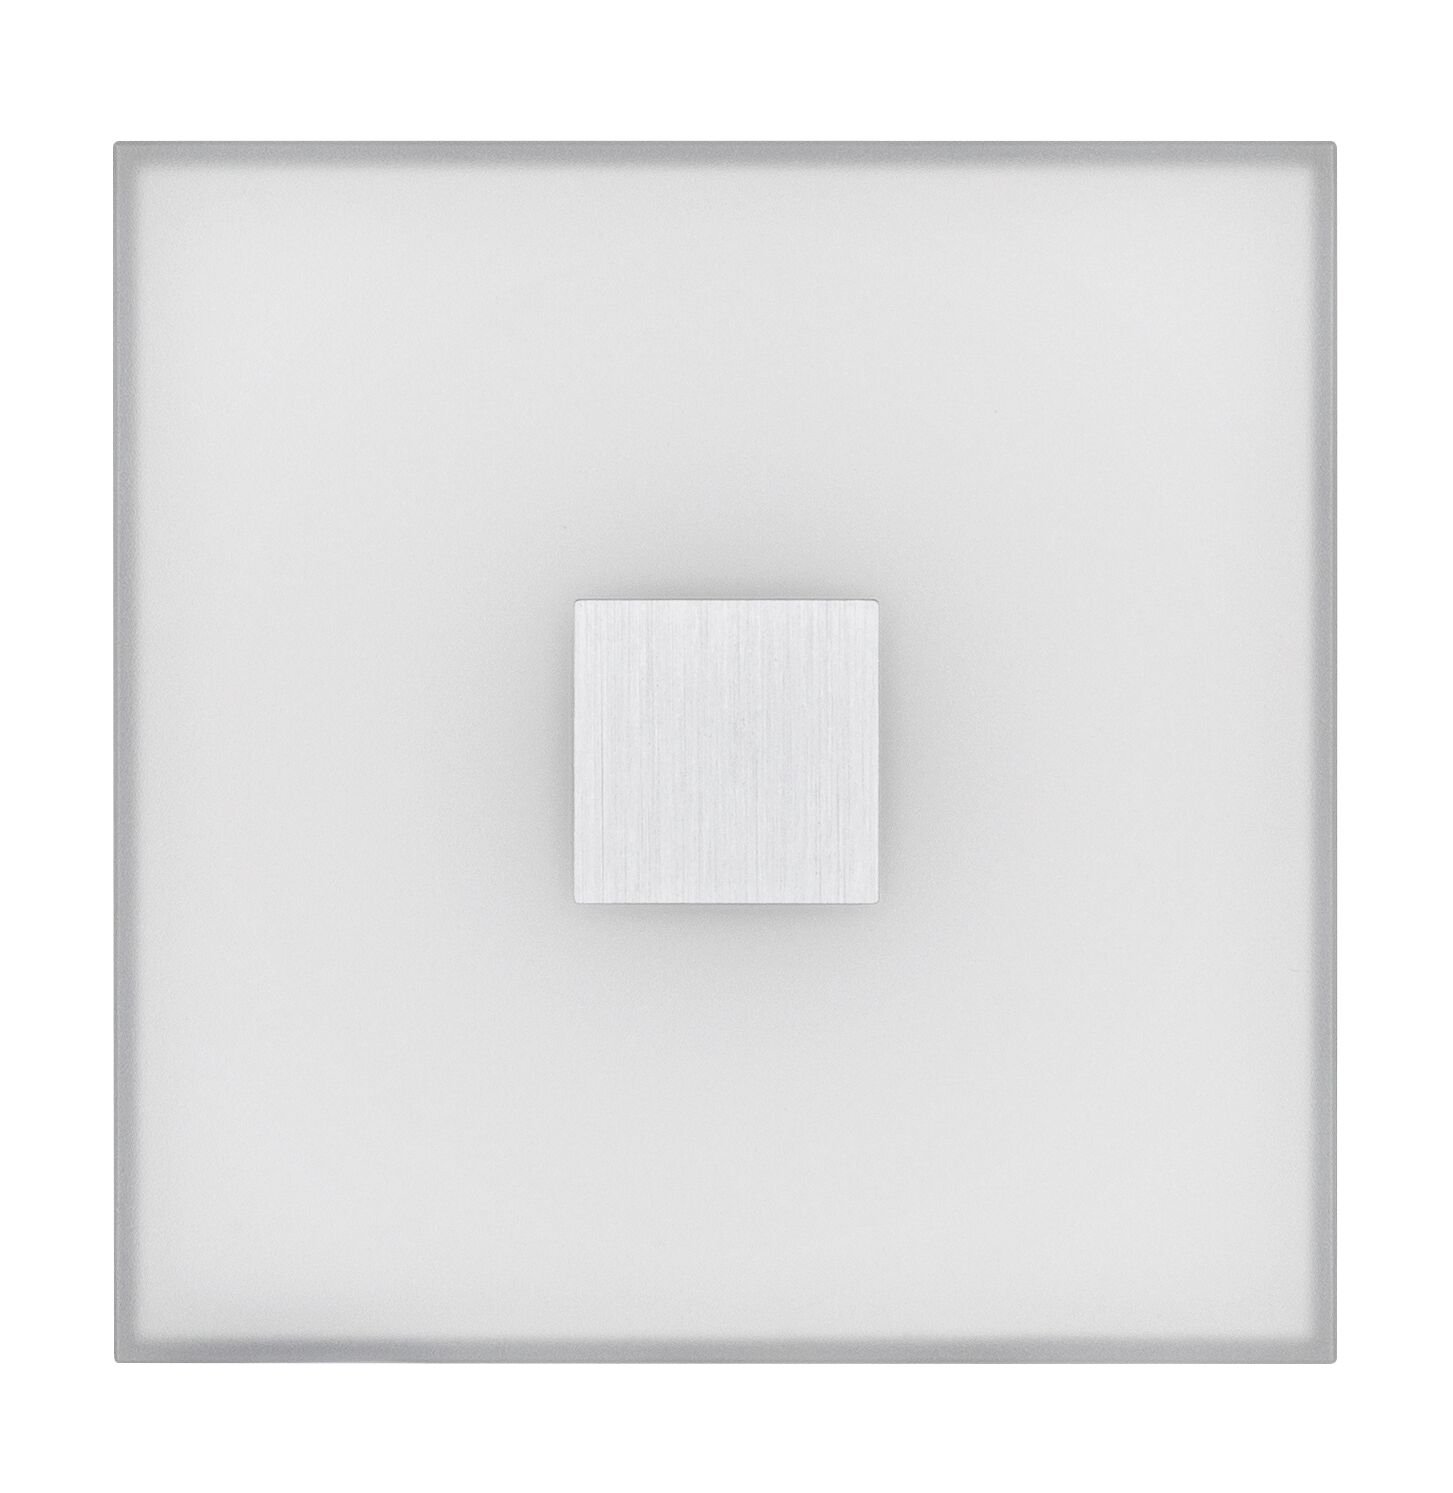 LumiTiles LED Fliesen Square Einzelfliese IP44 100x10mm 20lm 12V 0,8W dimmbar 2700K Weiß Kunststoff/Aluminium